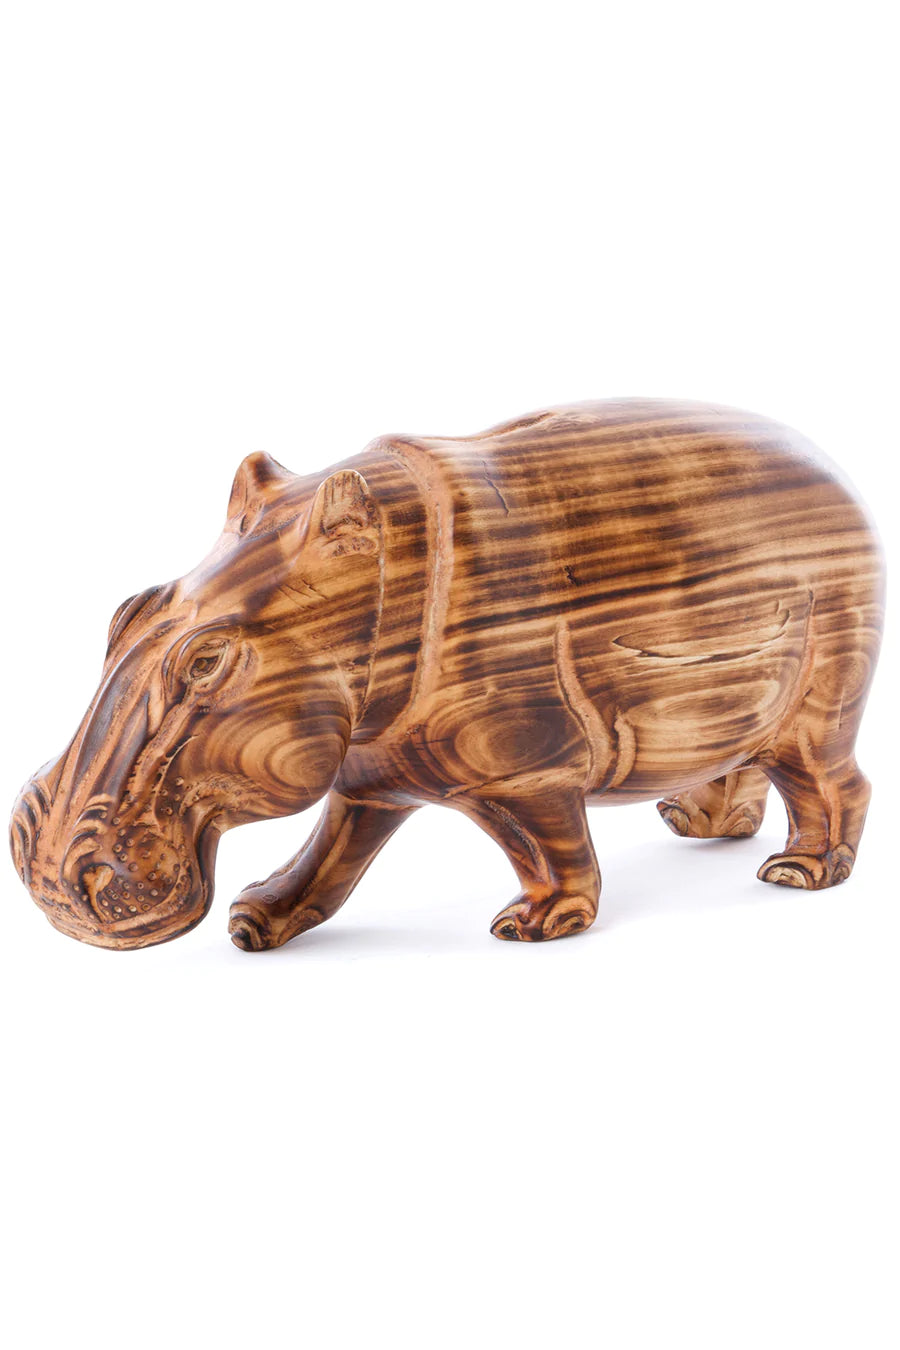 Jacaranda Hippo Sculpture